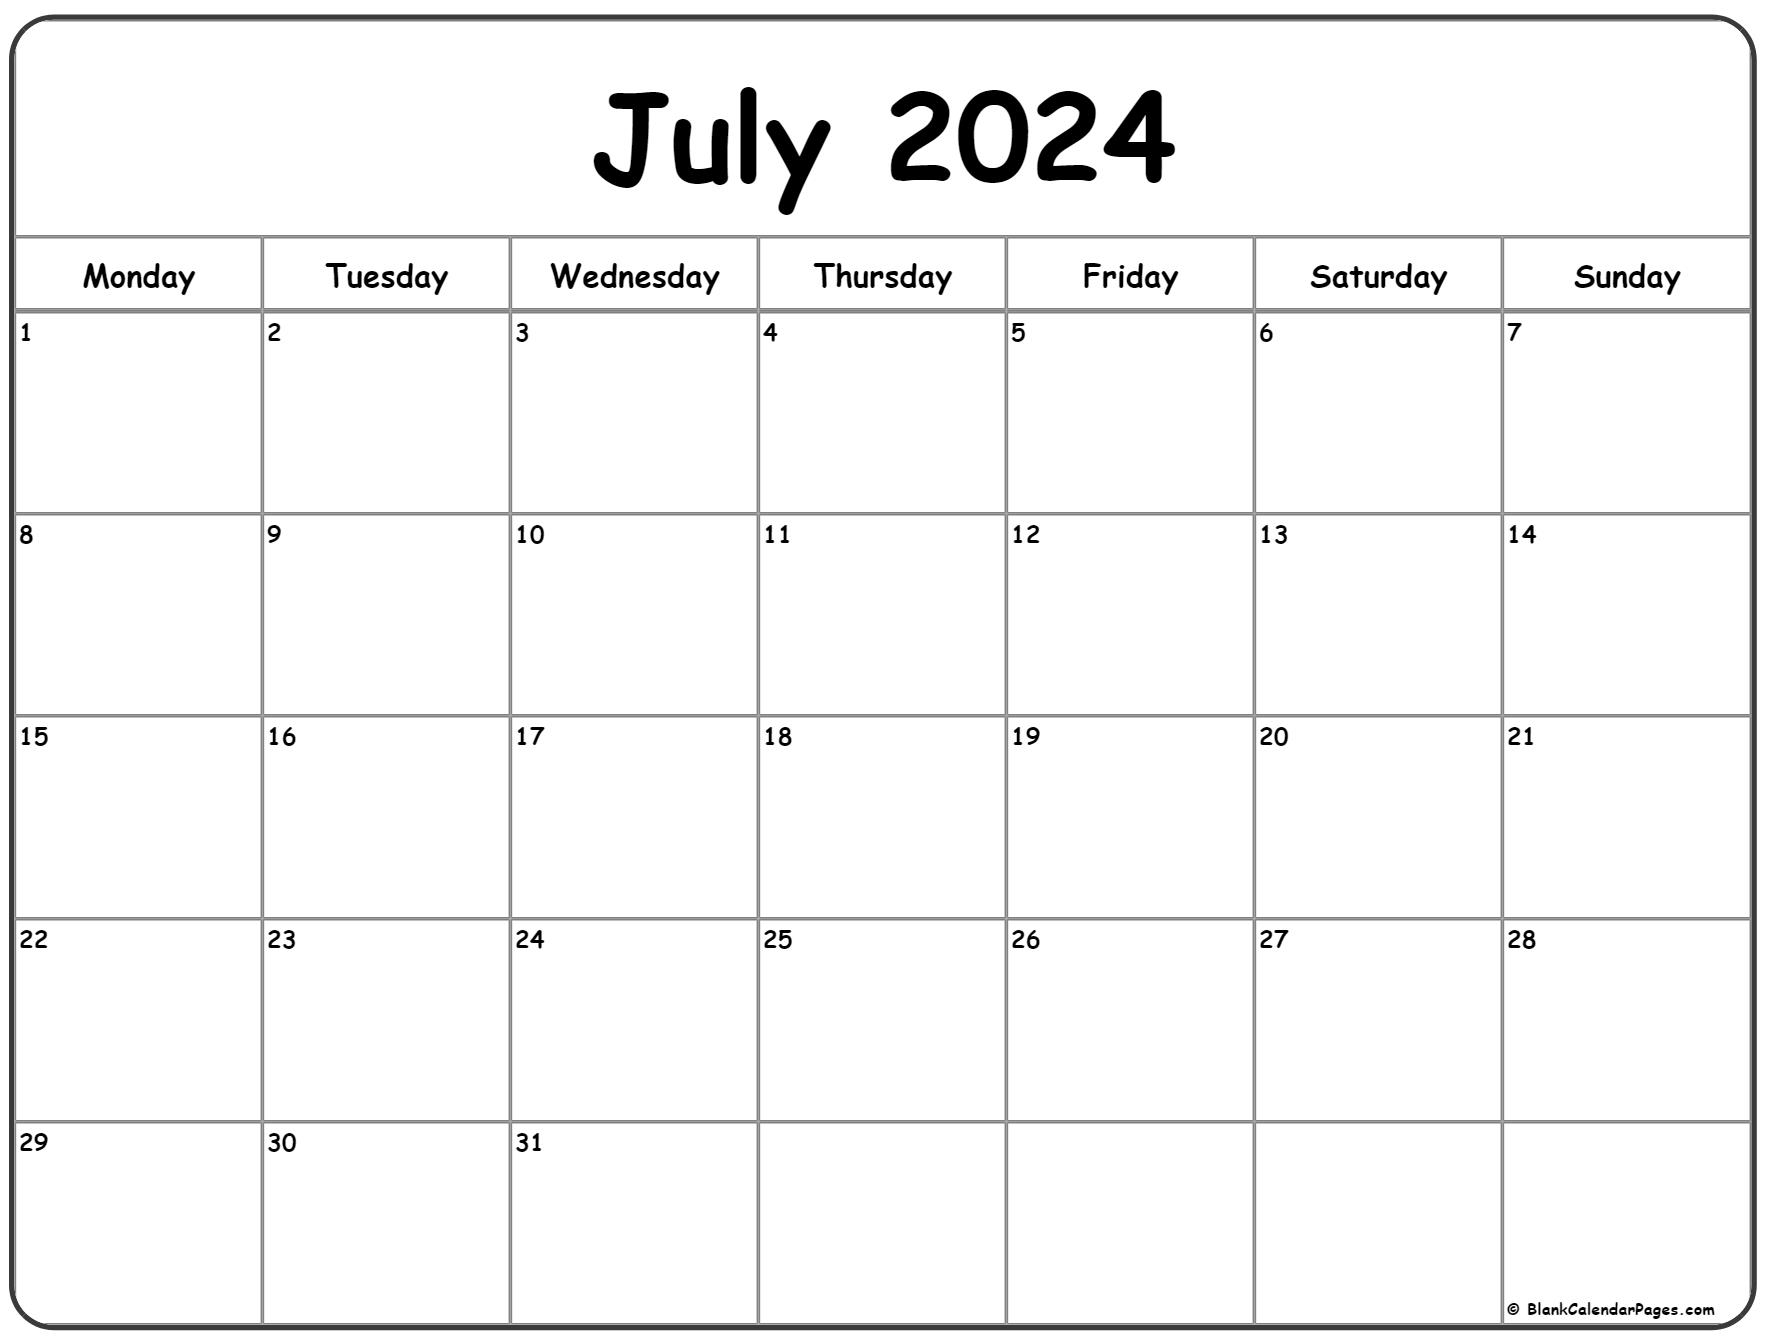 July 2024 Monday Calendar | Monday To Sunday for July 2024 Calendar Printable